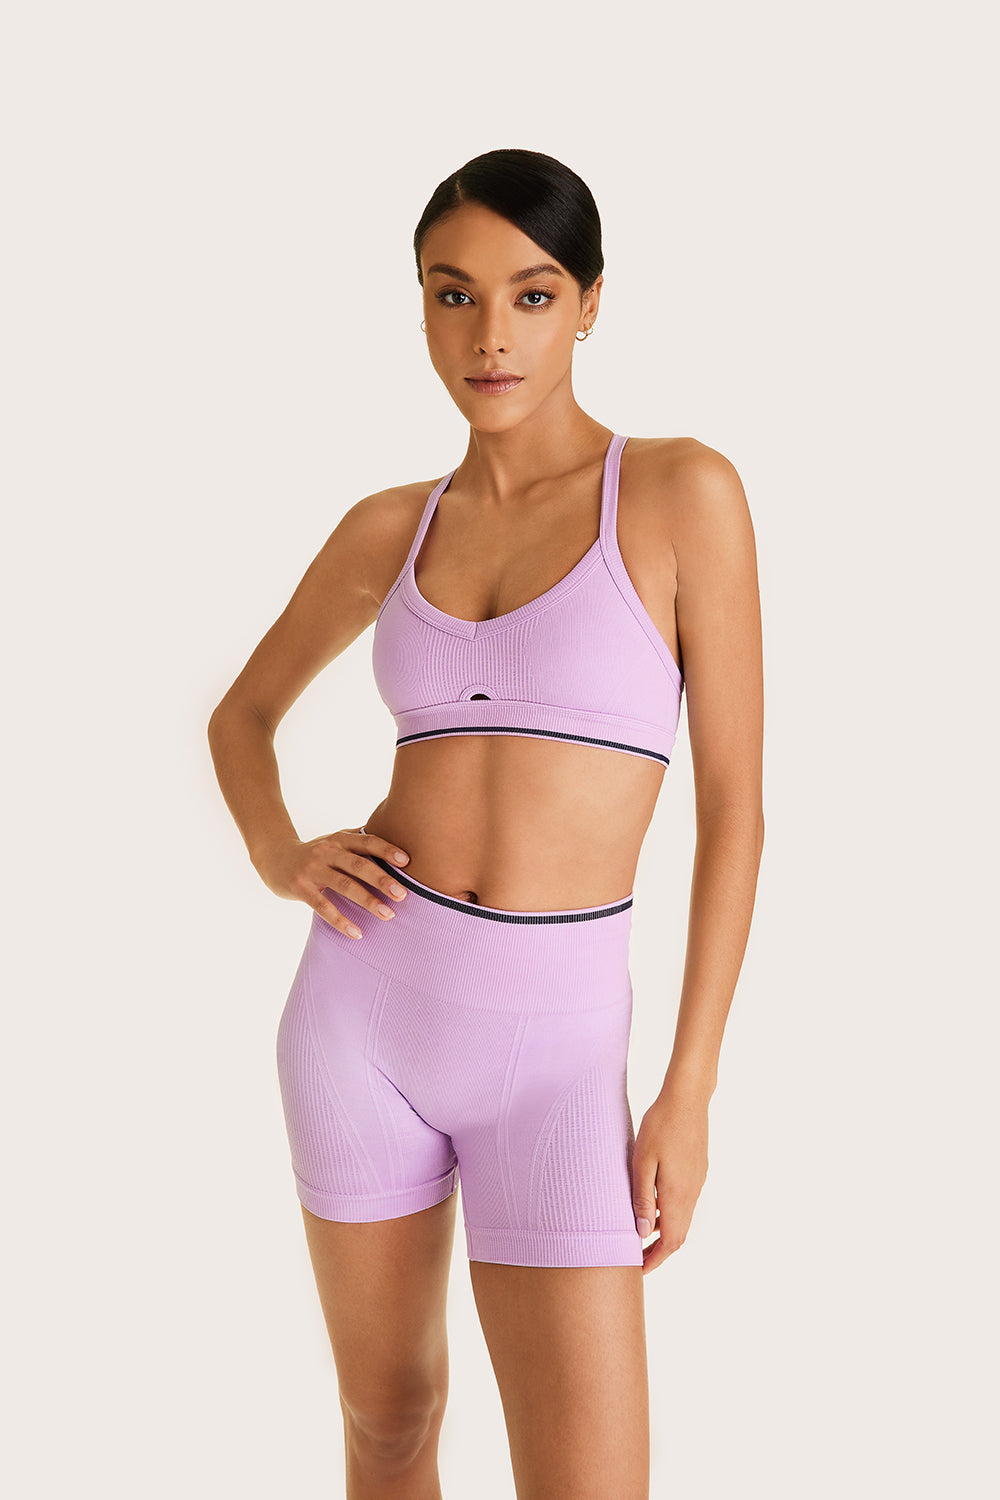 South Beach Plus twist strap light support sports bra in violet